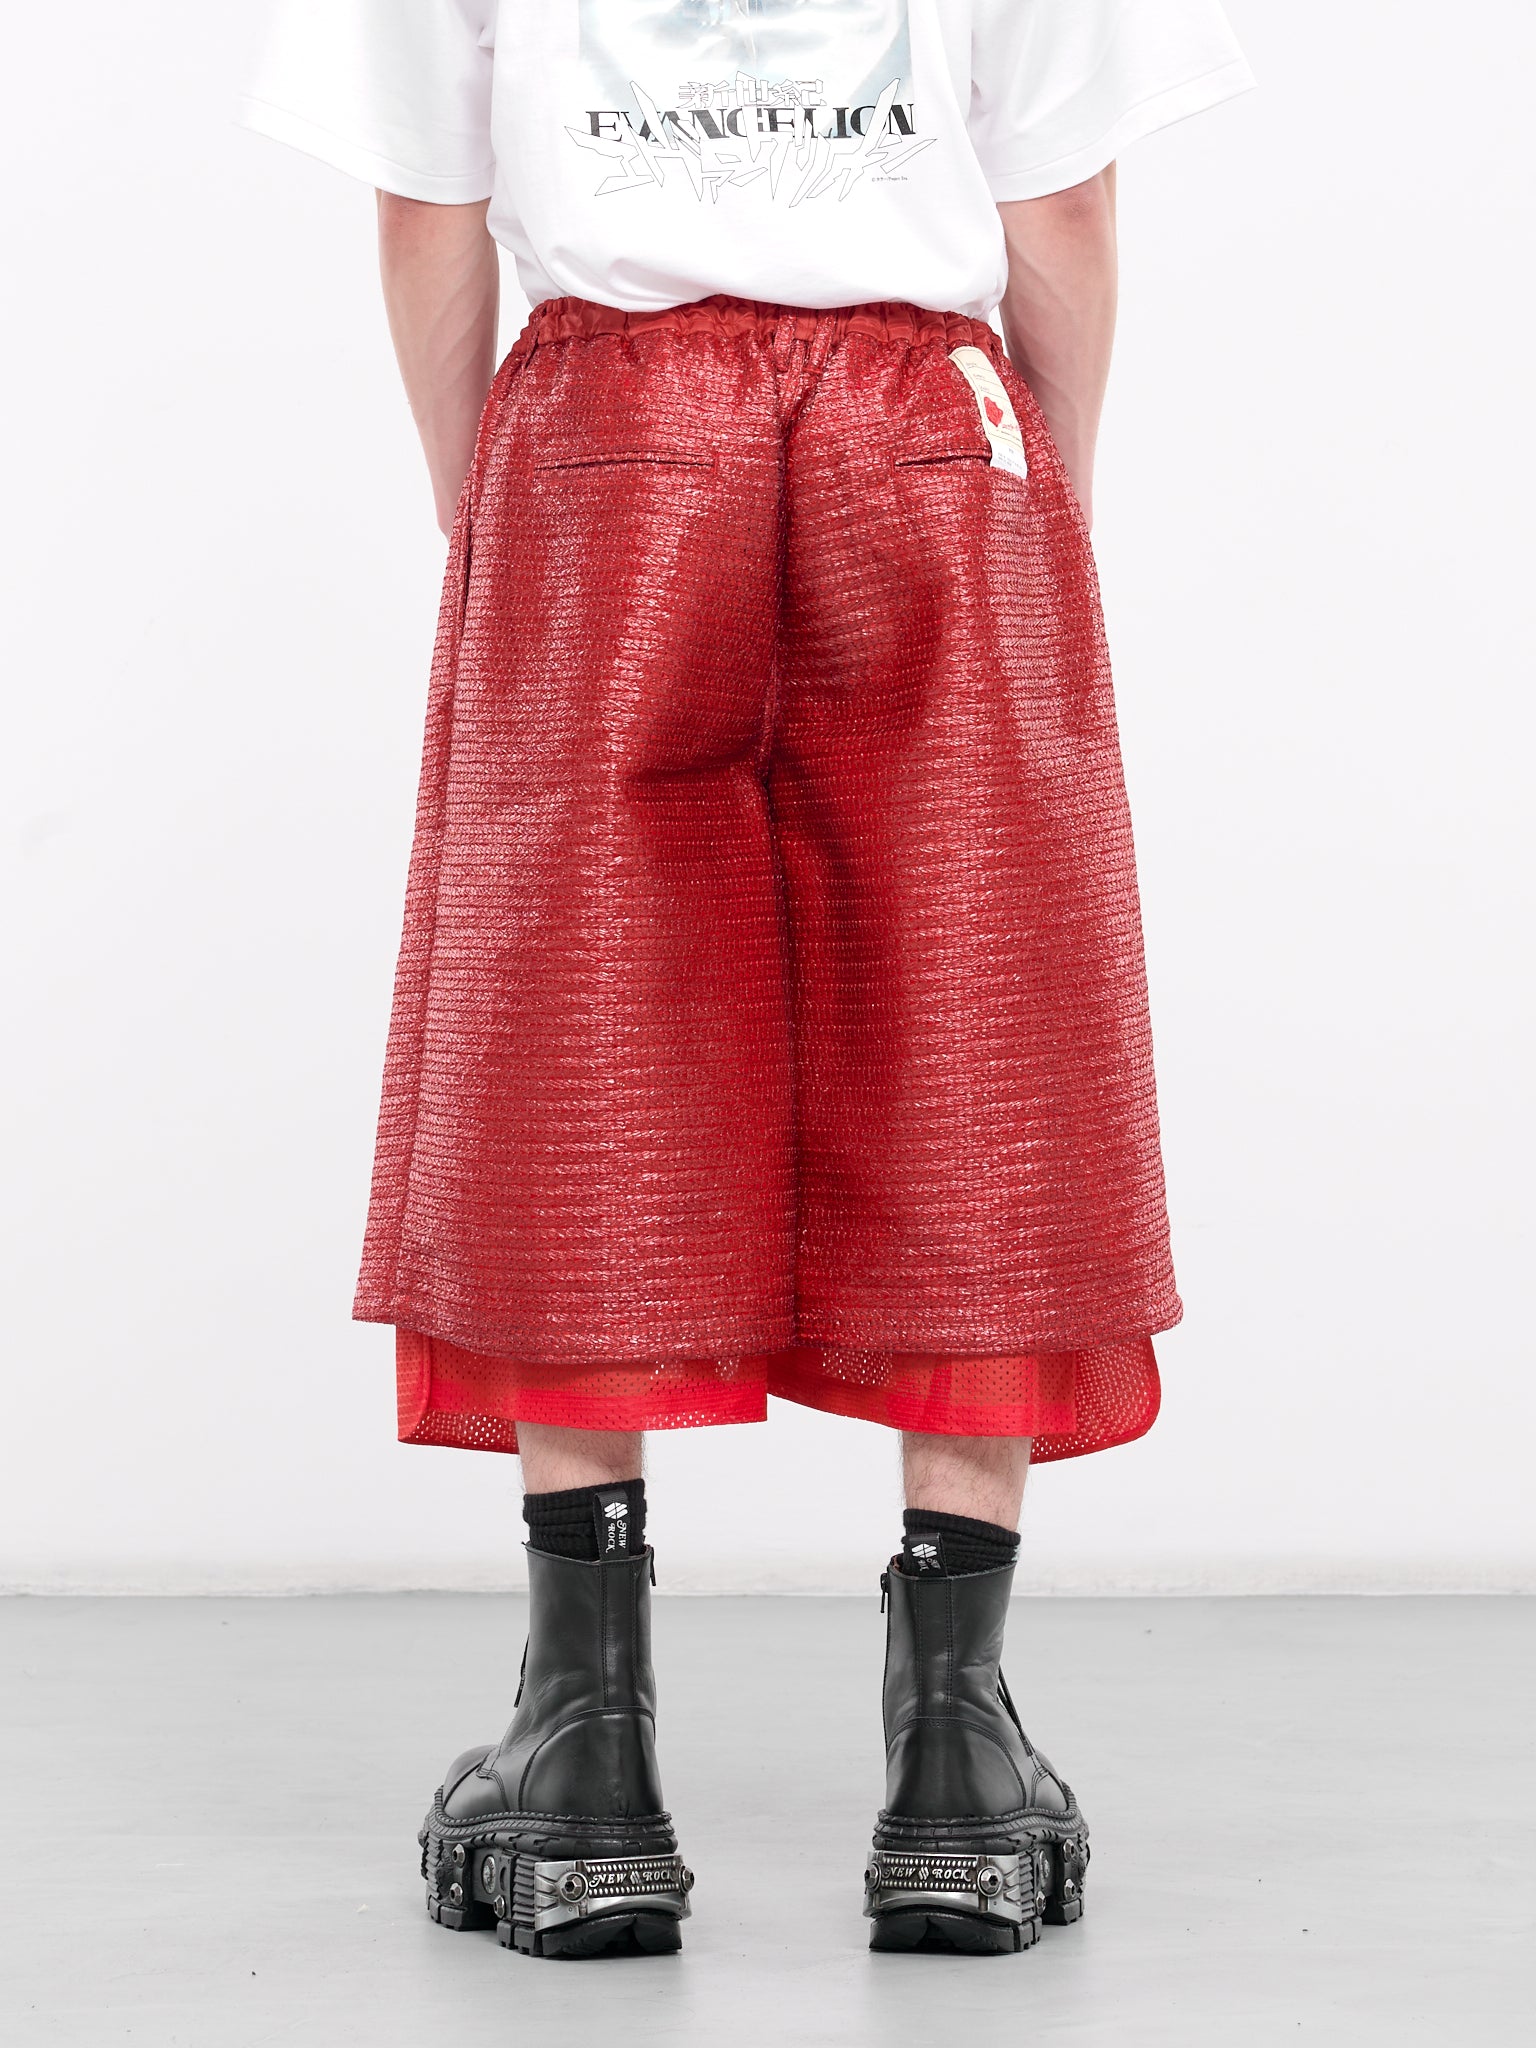 Nylon Knit Shorts (PT-SV-NYS-1007-RED)